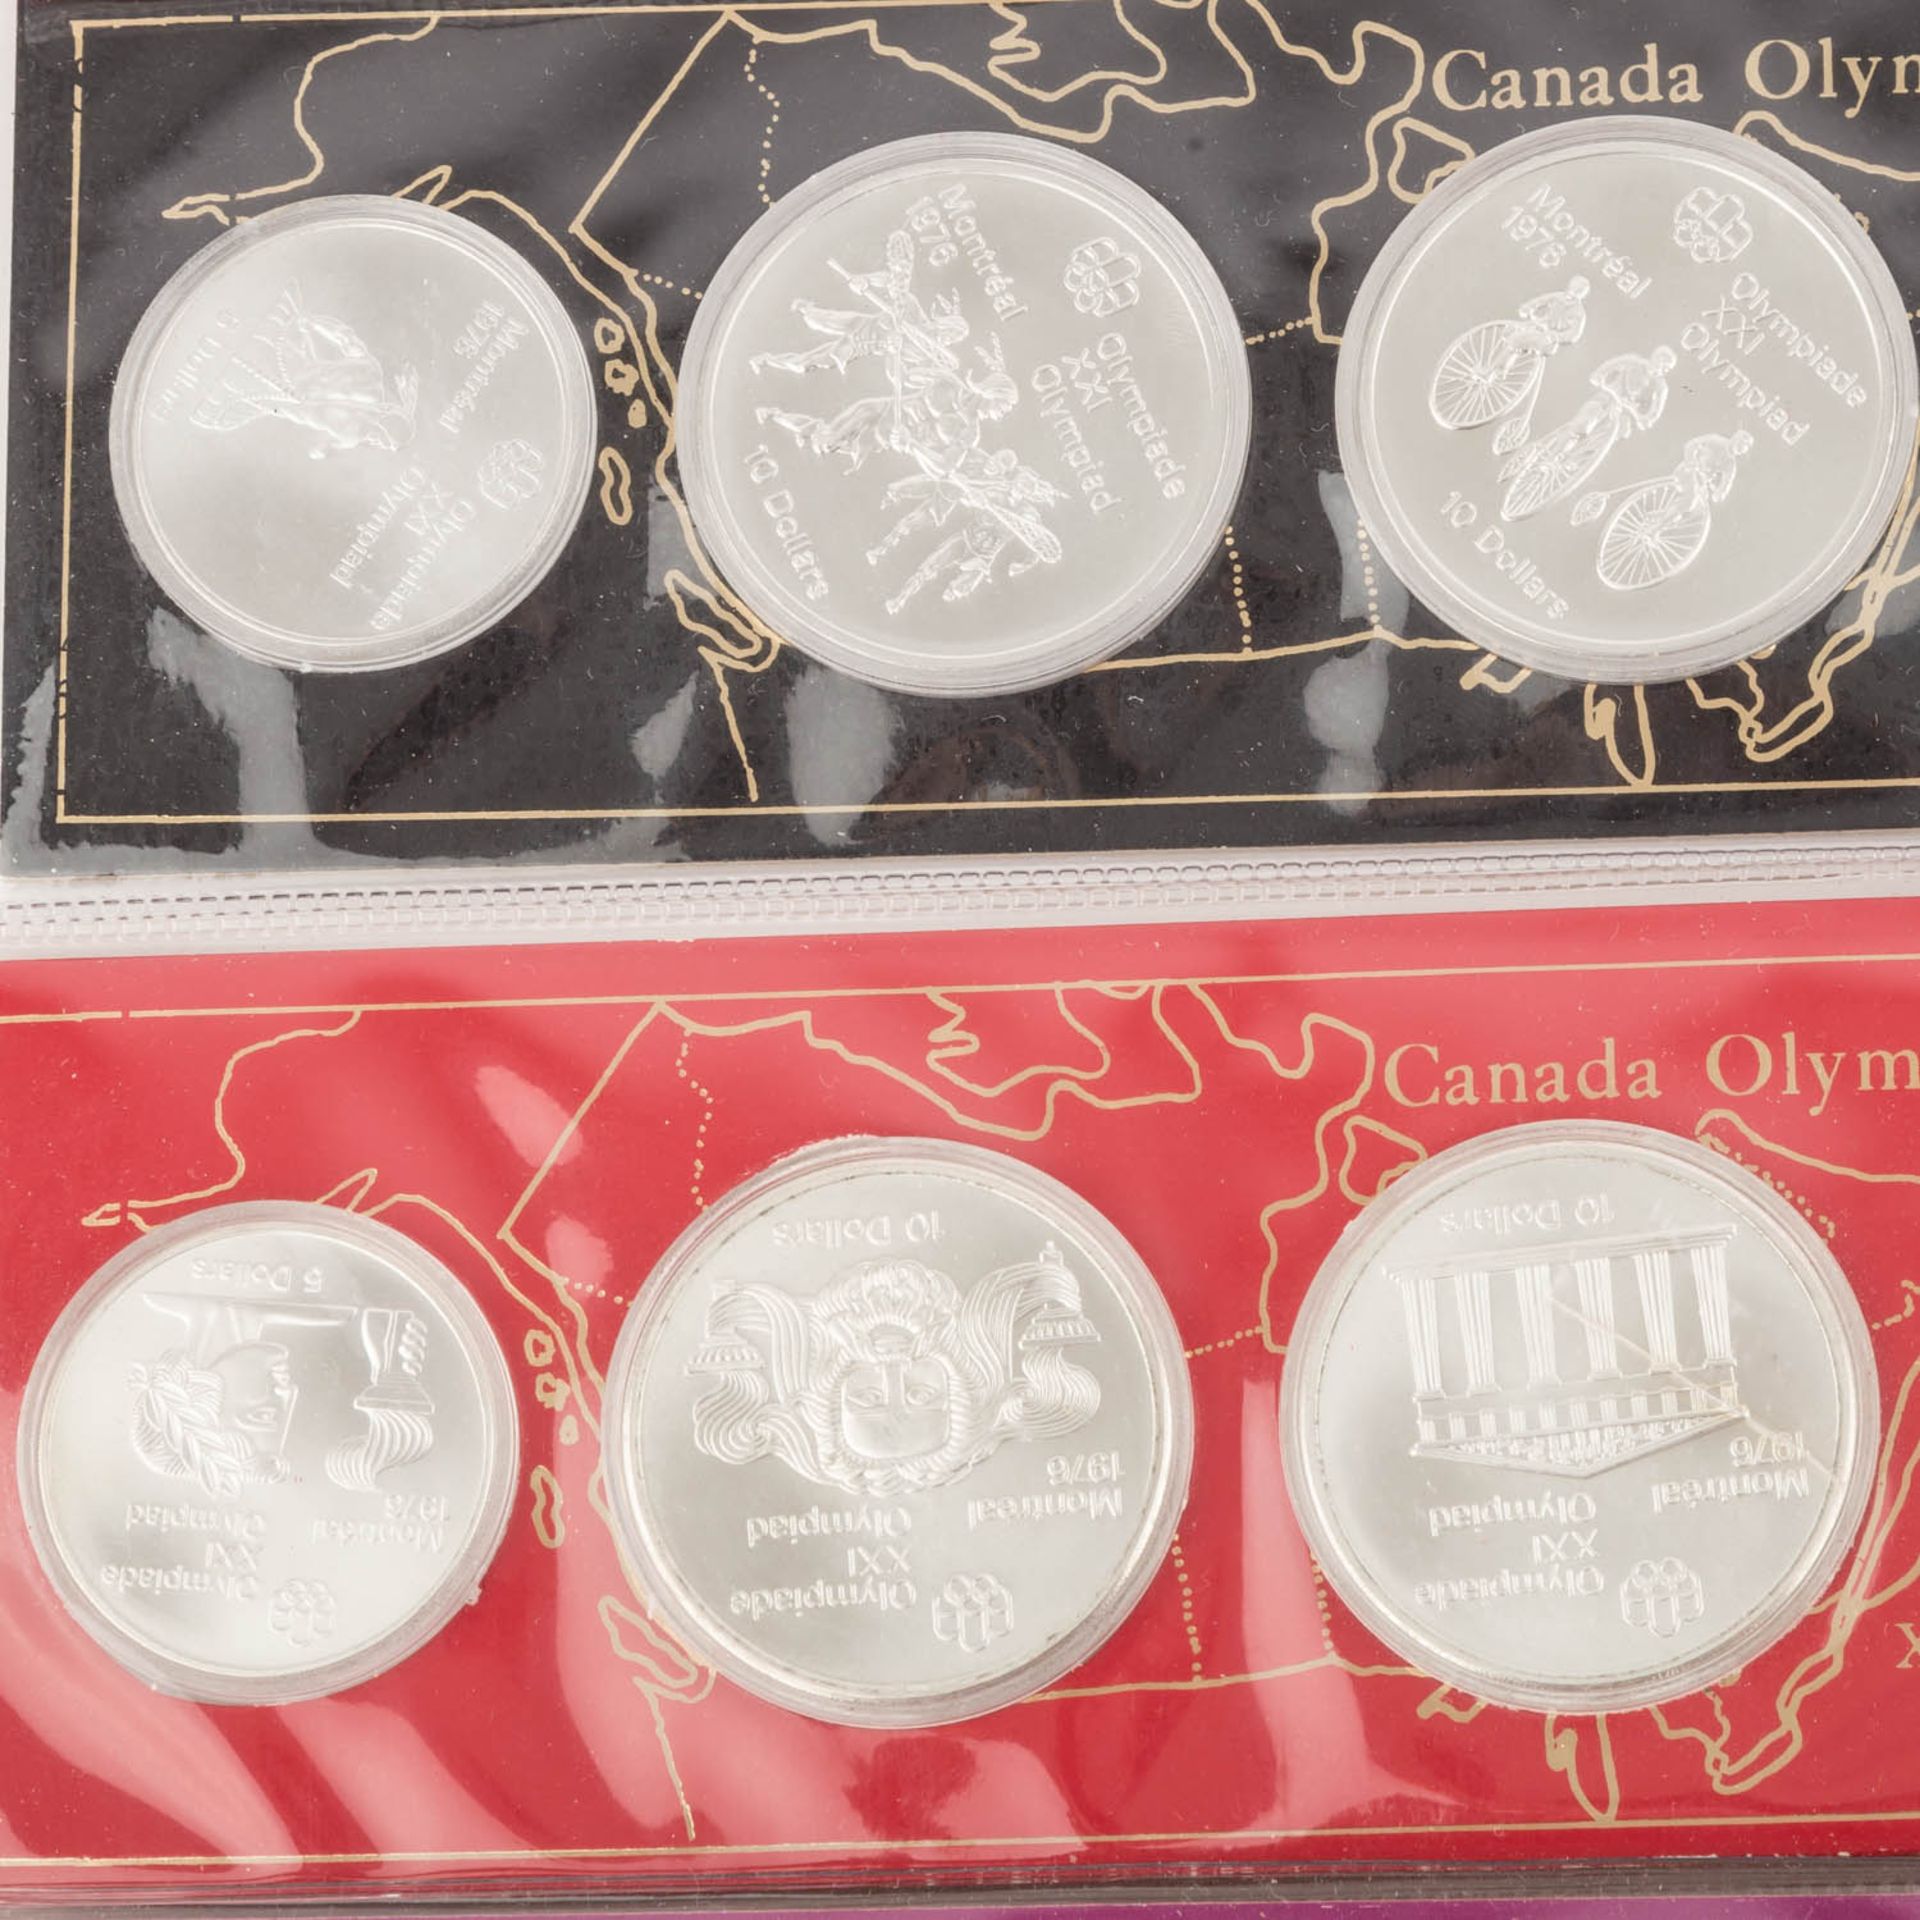 Kanada - Olympiade Montreal 1976 in st,10 x Olympic Coin Set á 2 x 10 Dollars und 2 x 5 Dollars, - Bild 3 aus 3